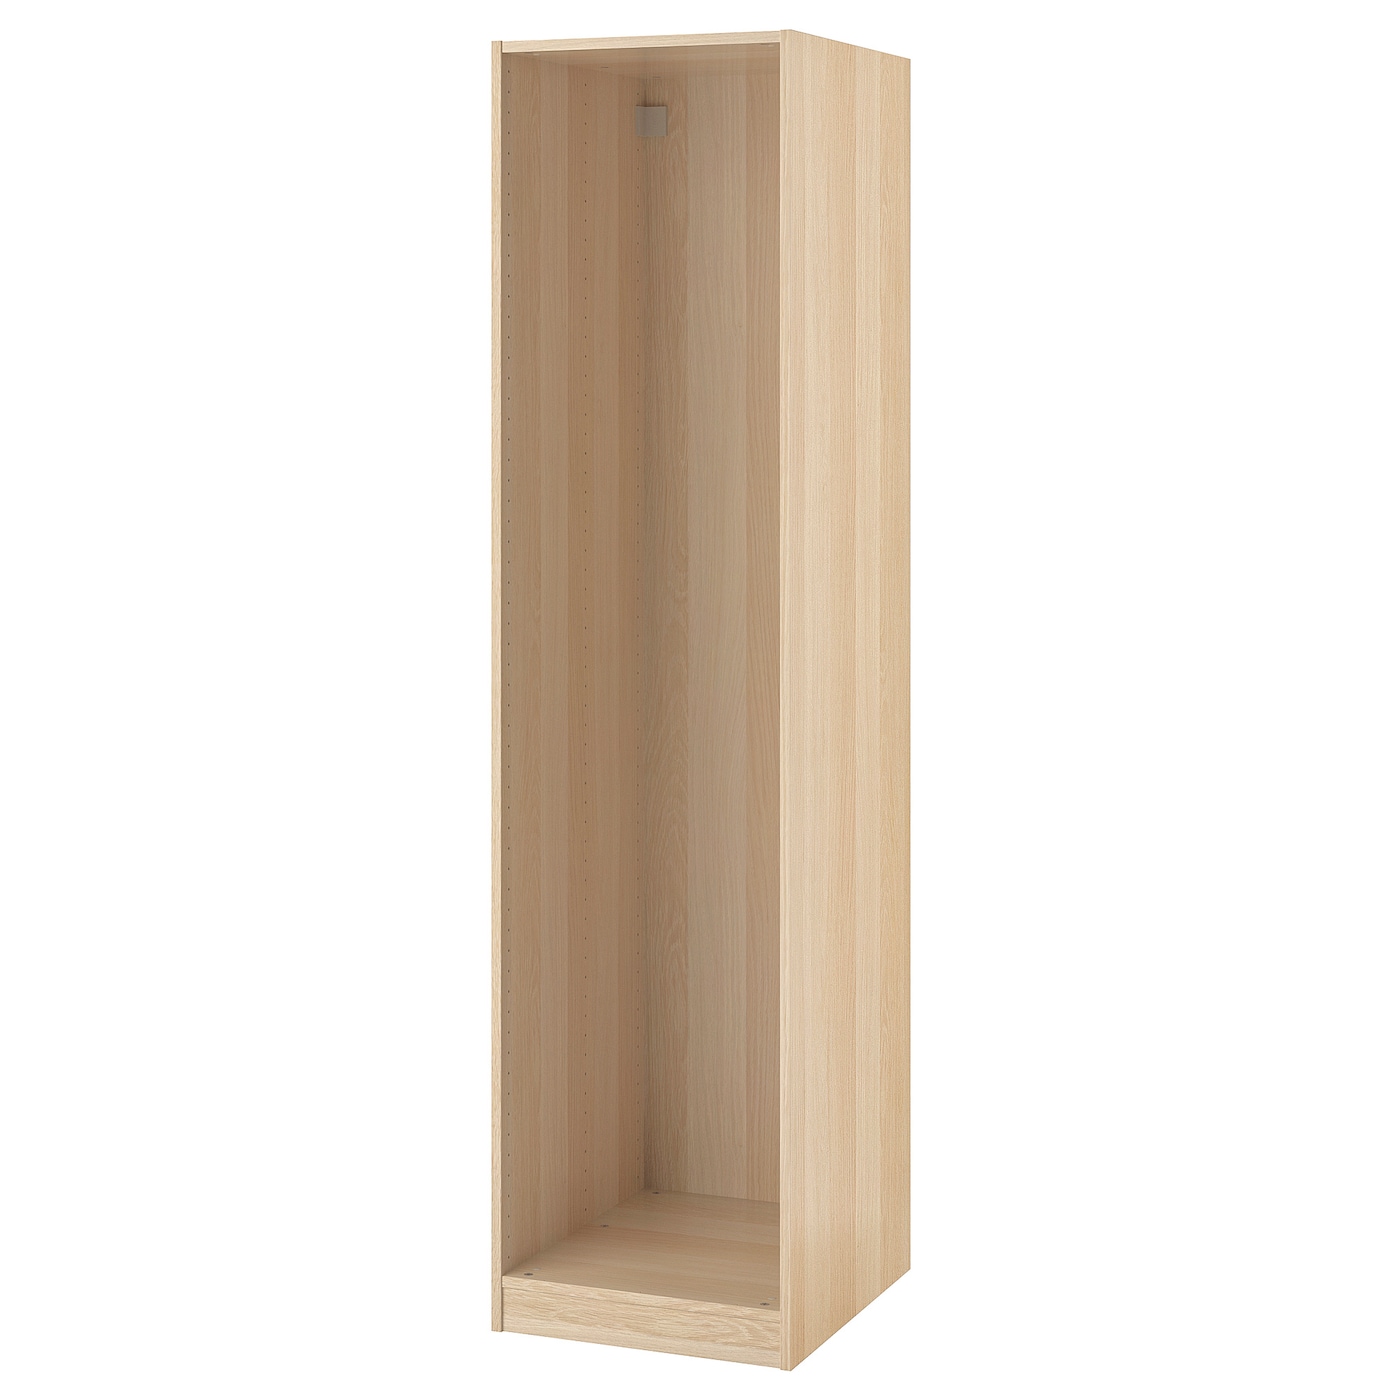 Каркас гардероба - IKEA PAX, 50x58x201 см, под беленый дуб ПАКС ИКЕА